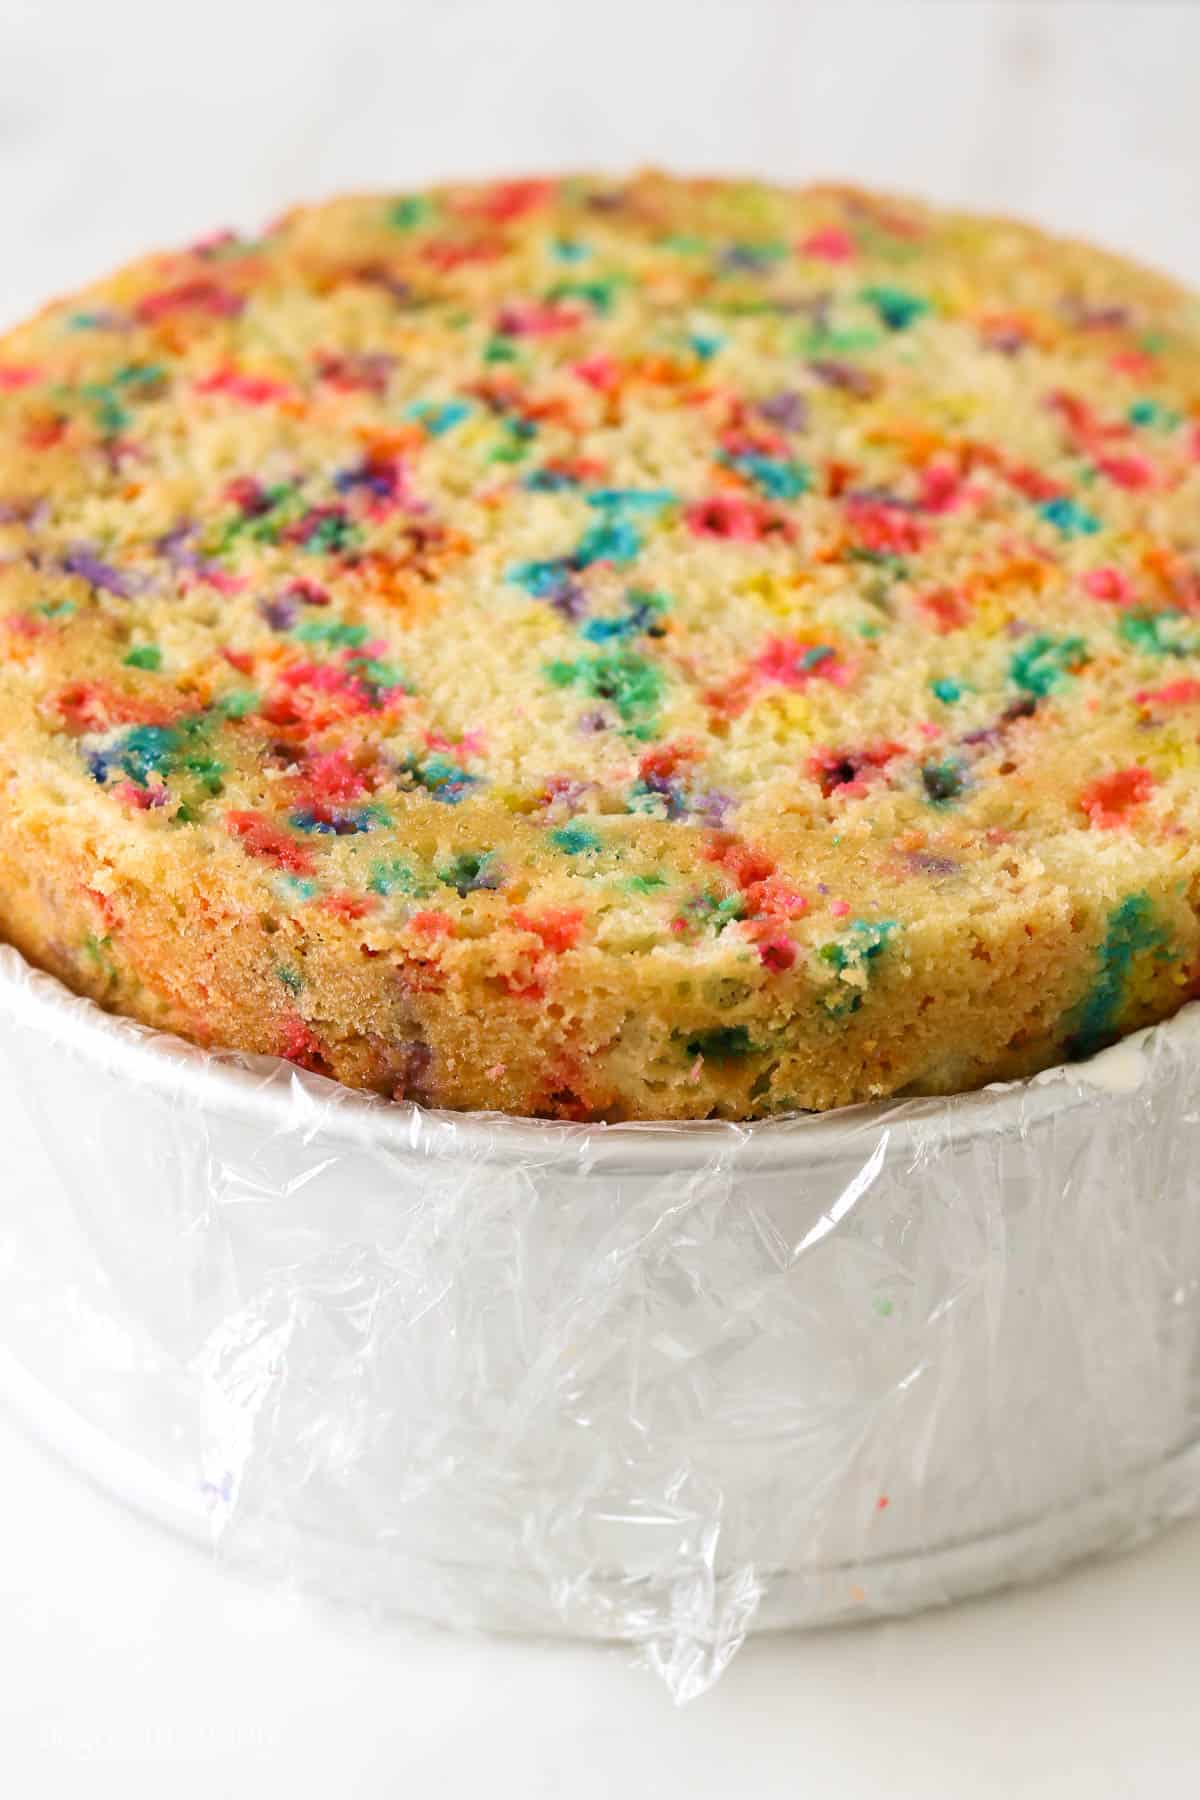 A layer of funfetti cake in a cake pan